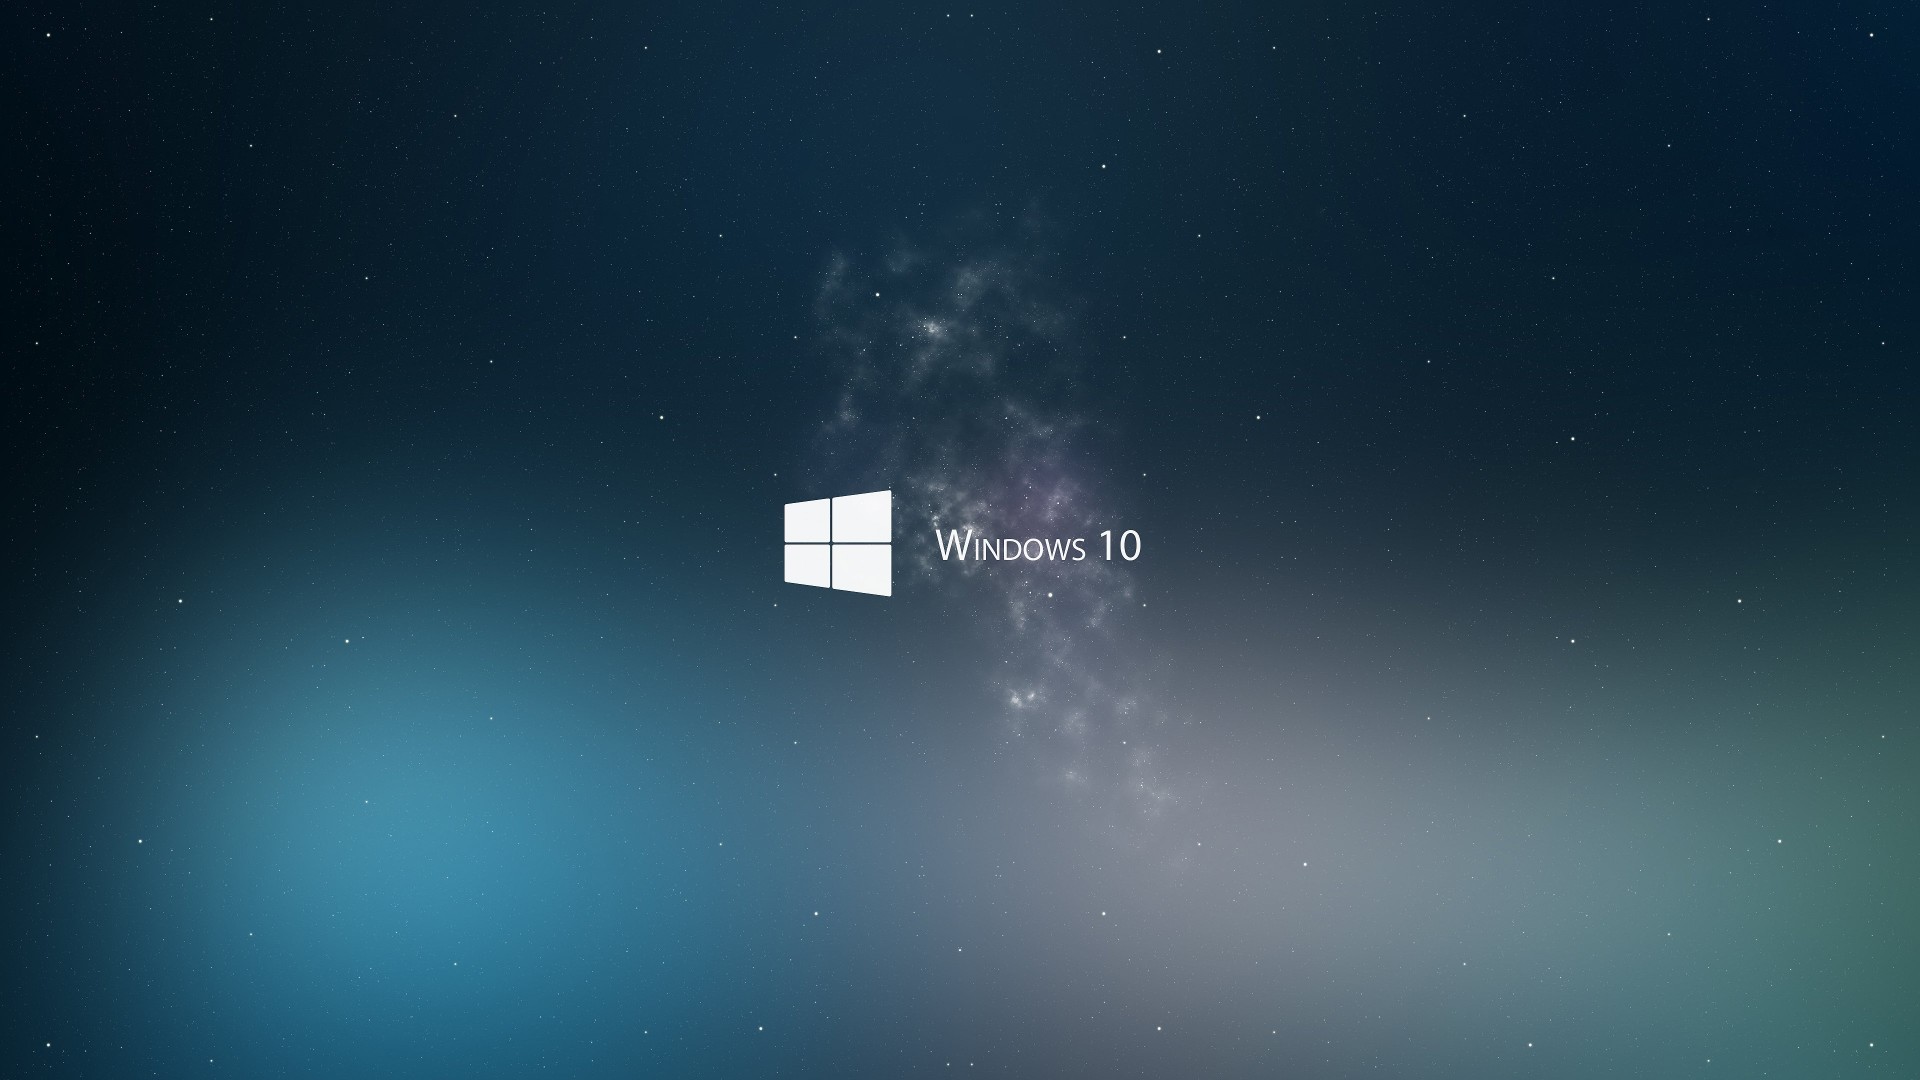 Windows 10 Wallpaper for Desktop 1920x1080